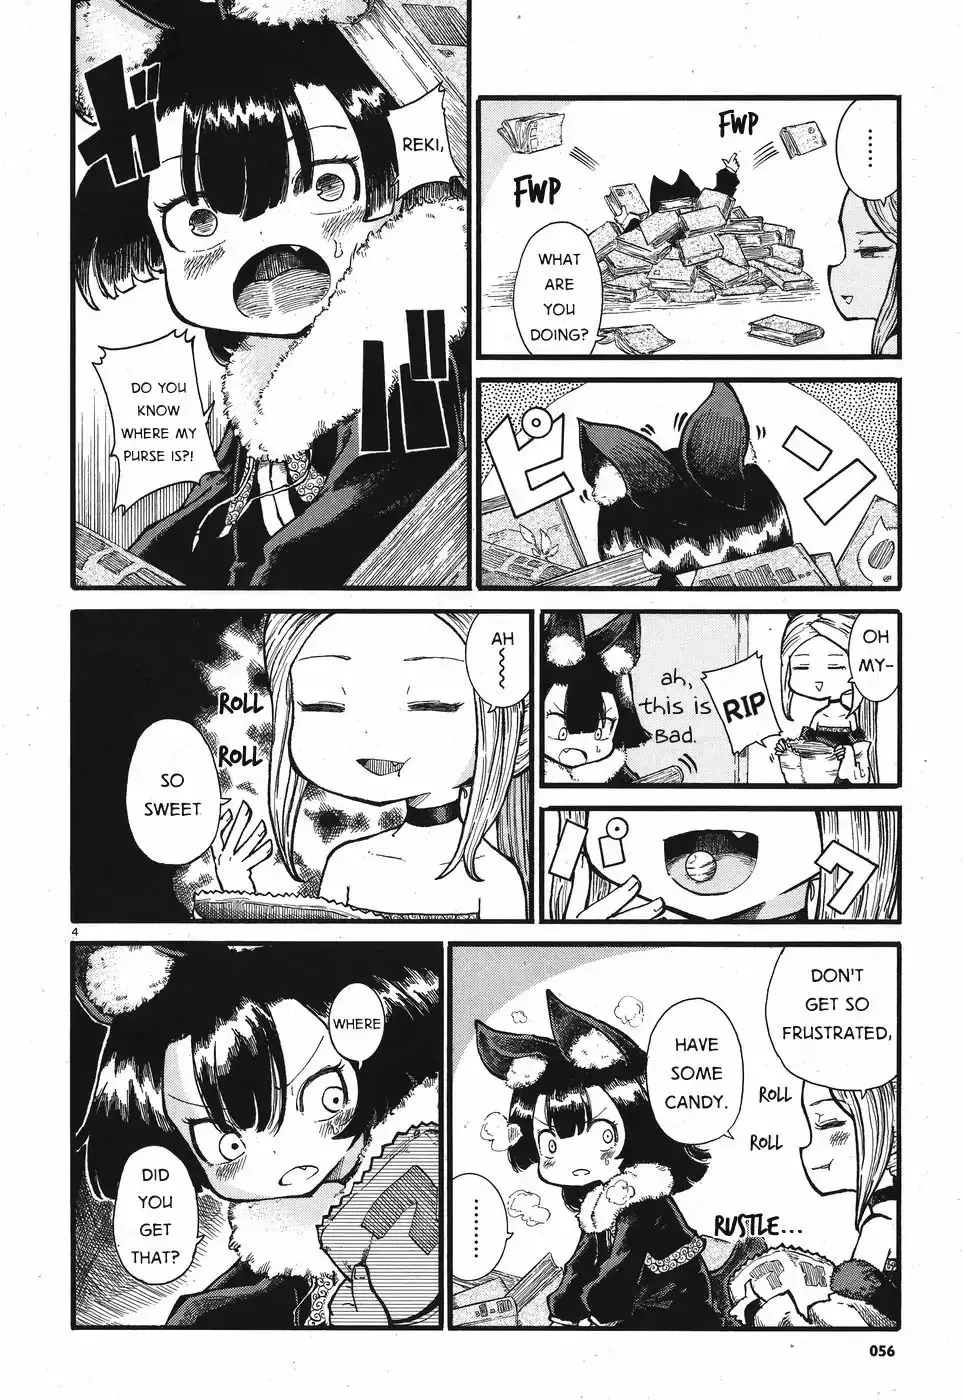 Reki Yomi - 1 page 4